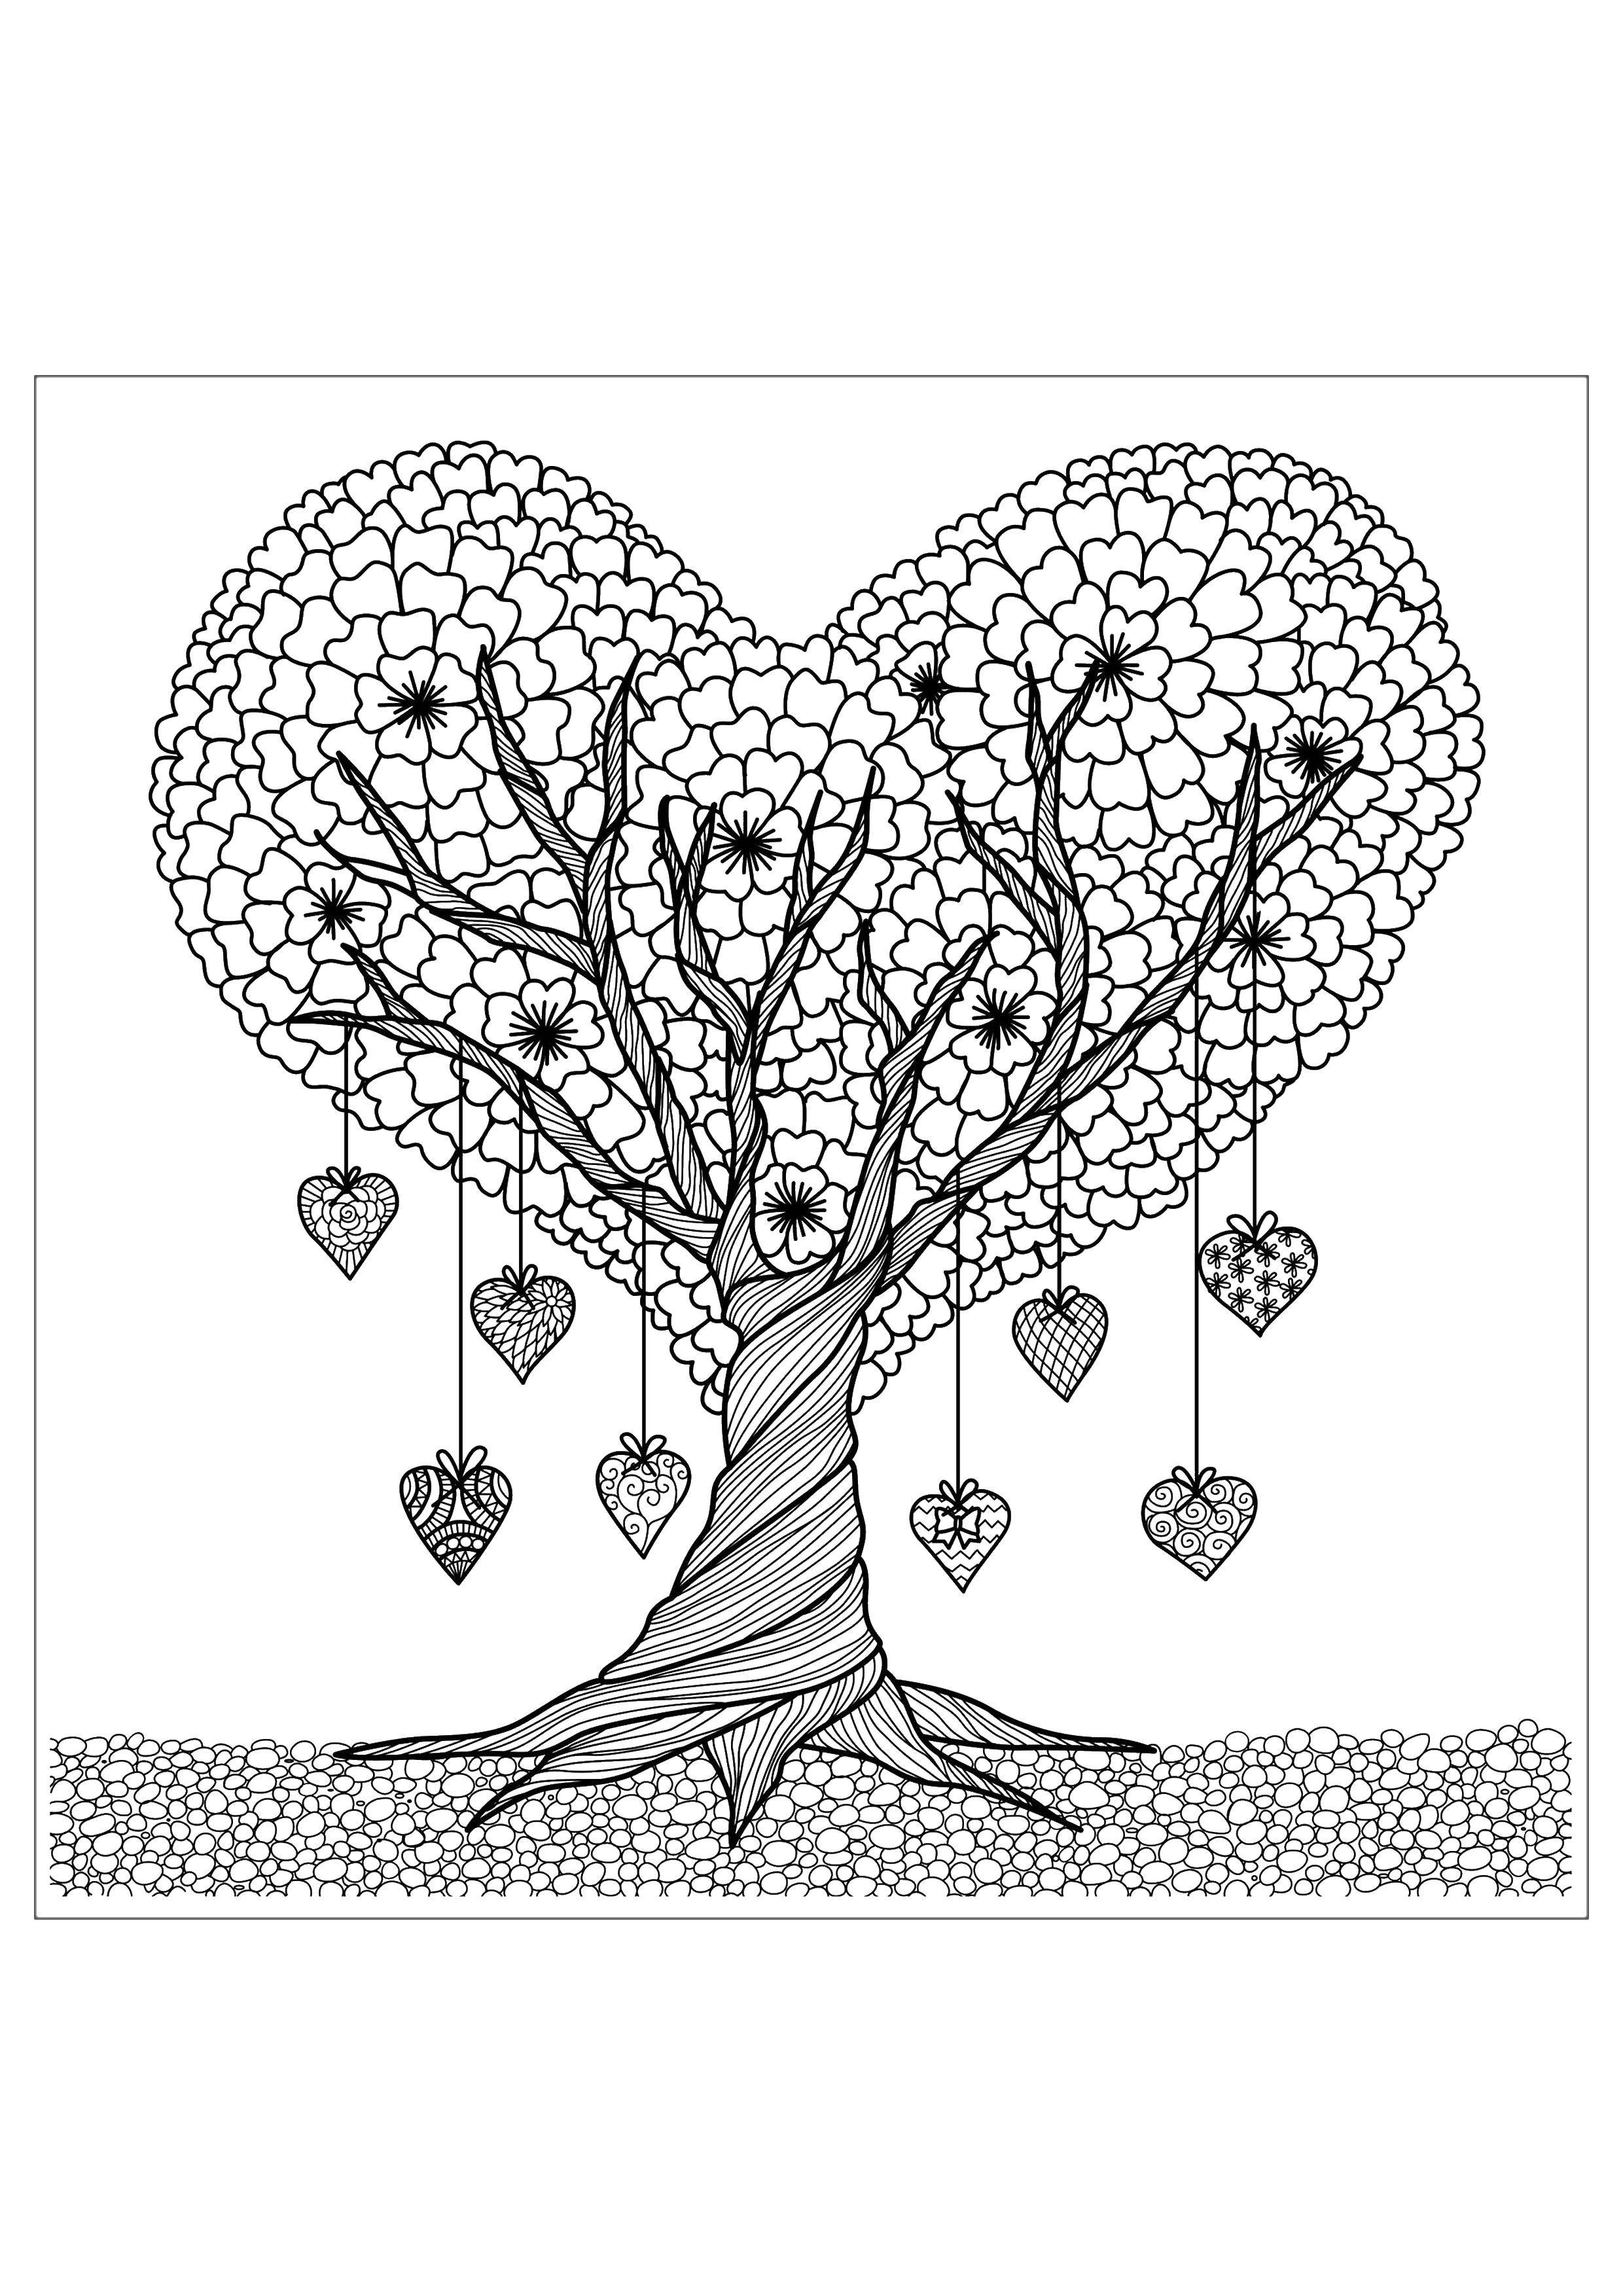 Название: Раскраска Дерево сердечко. Категория: Сложный дизайн. Теги: Антистресс, сердечки.